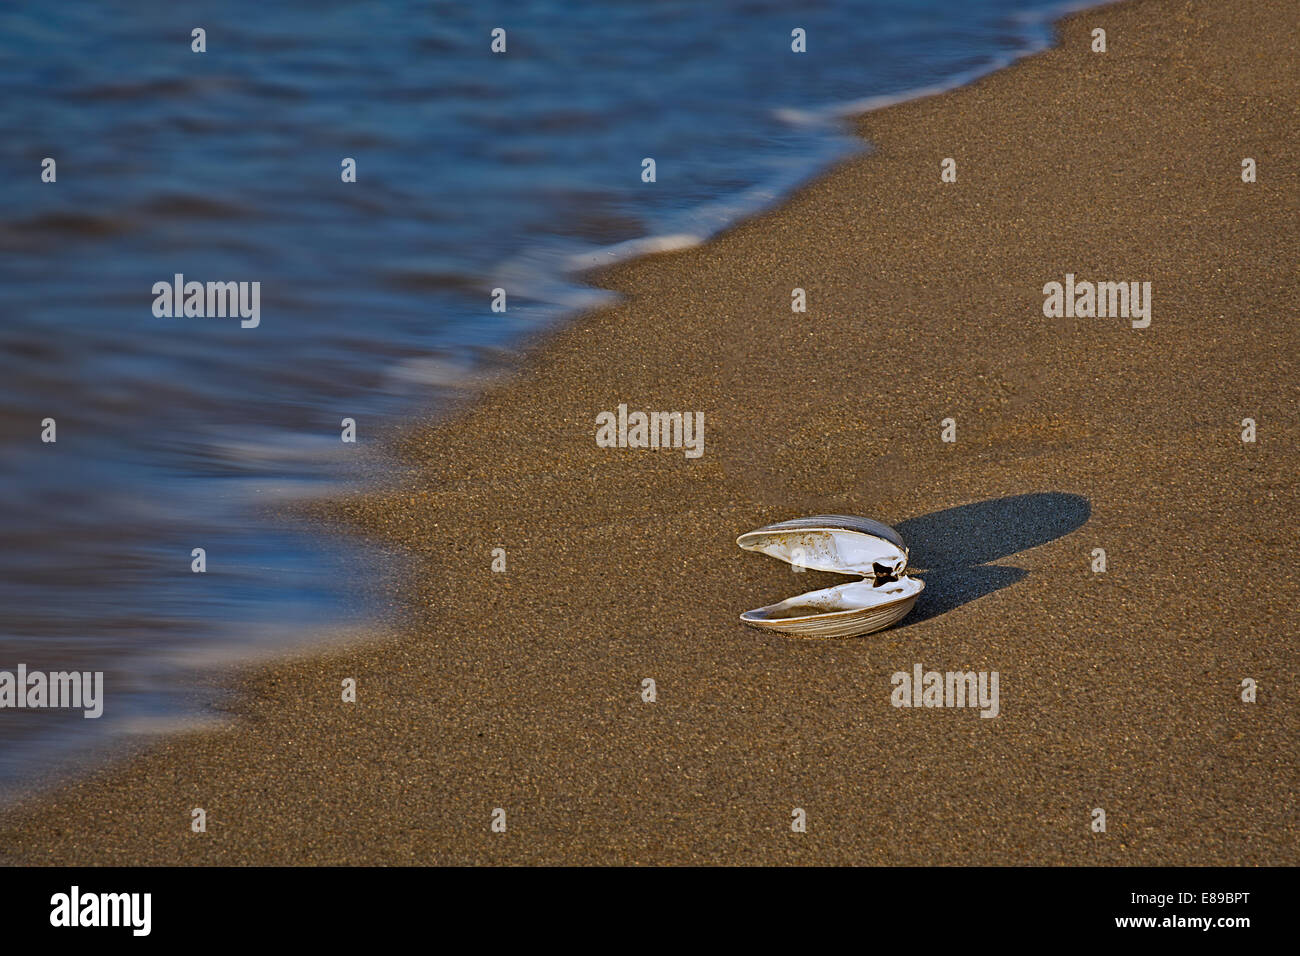 A single seashell on the wet sand by the beach at sundown. Stock Photo